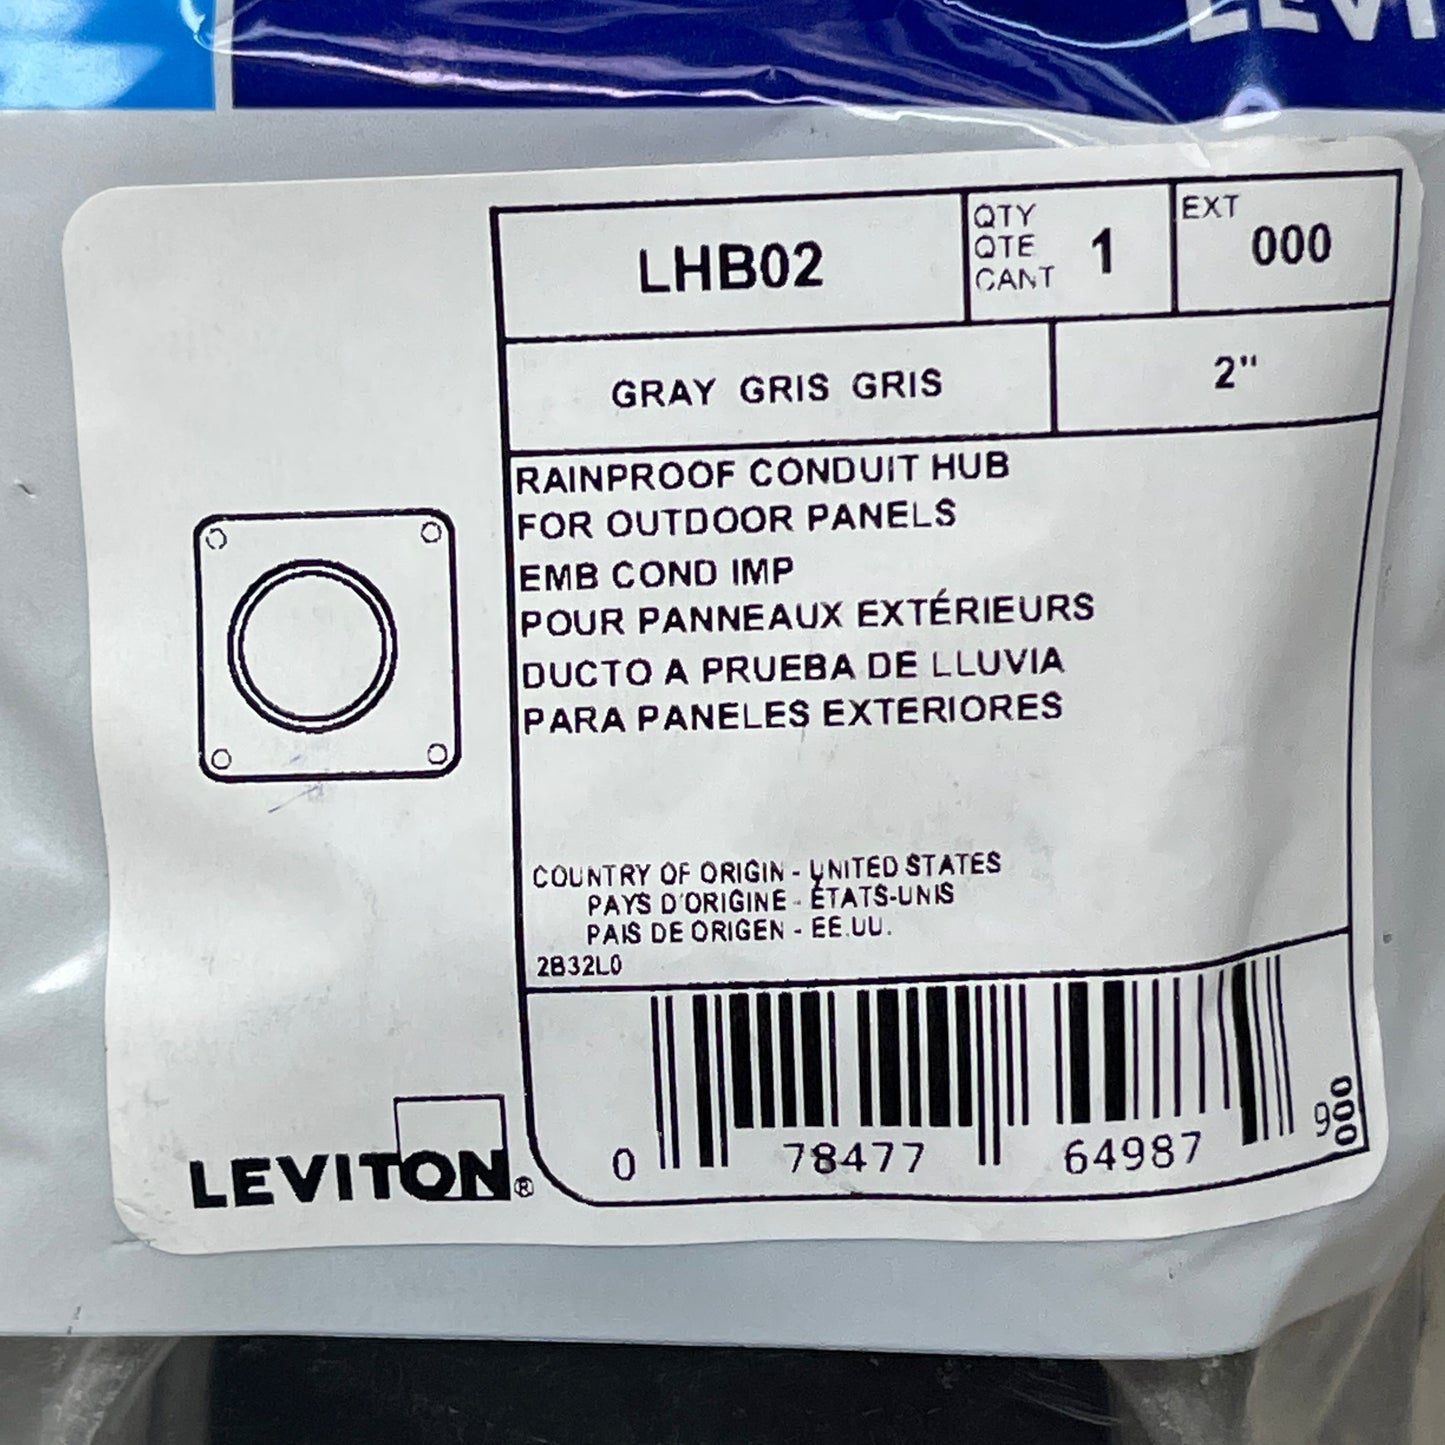 LEVITON Rainproof 2" Conduit Hub for Outdoor Panels 000-LHB02 (New)